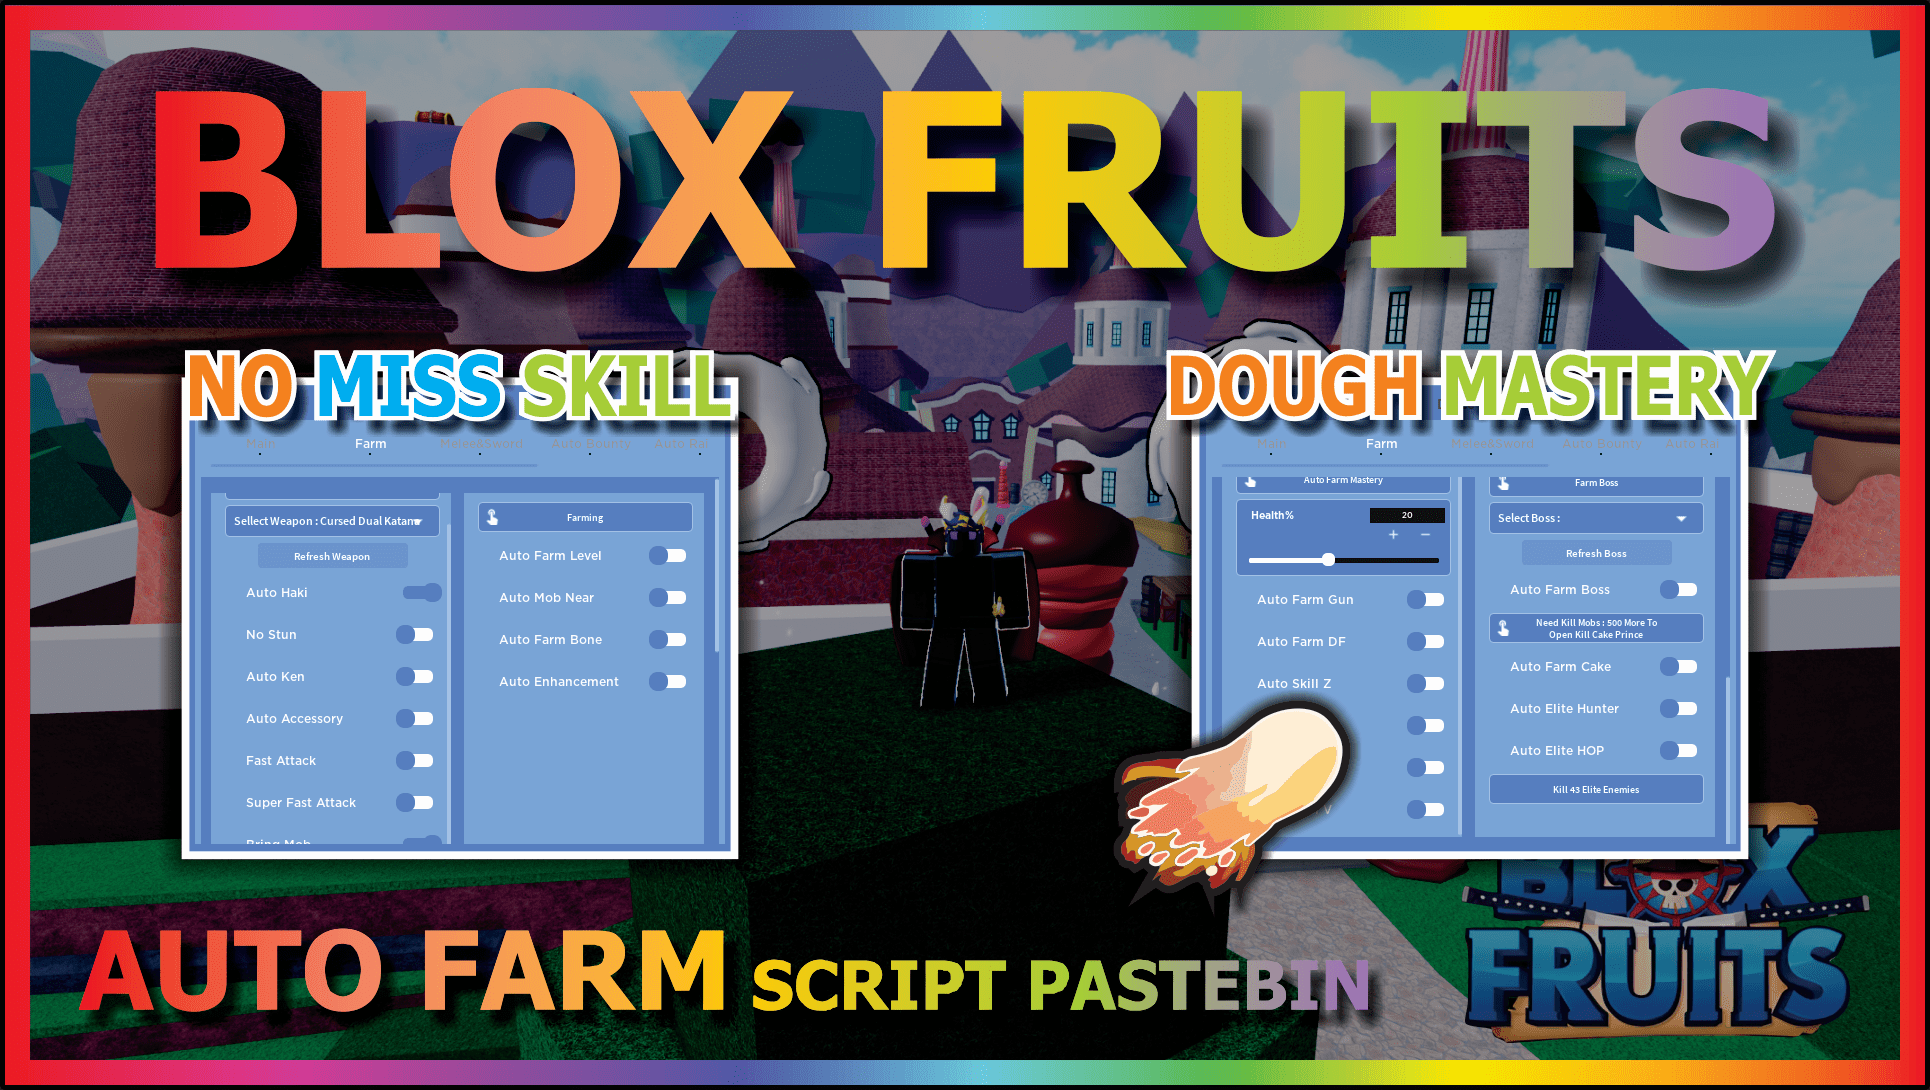 Fruta Da Massa Blox Fruits (Fruta Dough) - Roblox - DFG